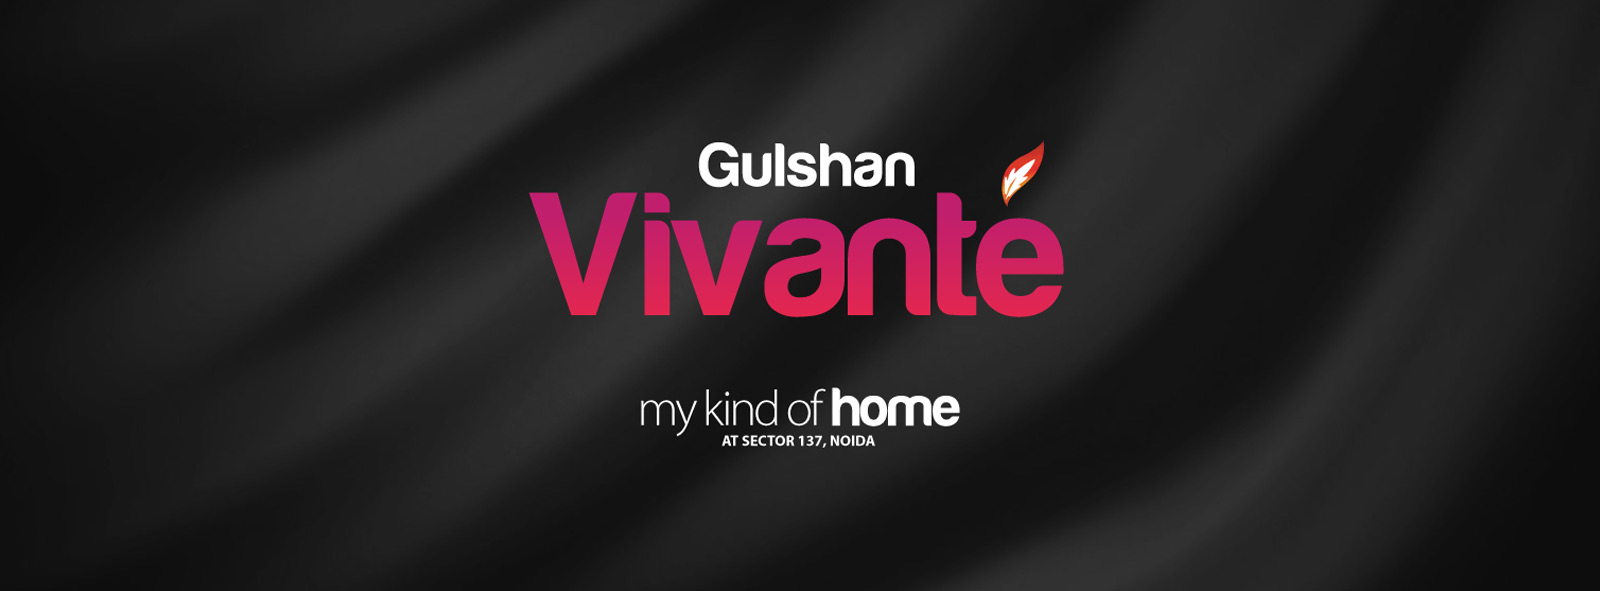 Gulshan Vivante